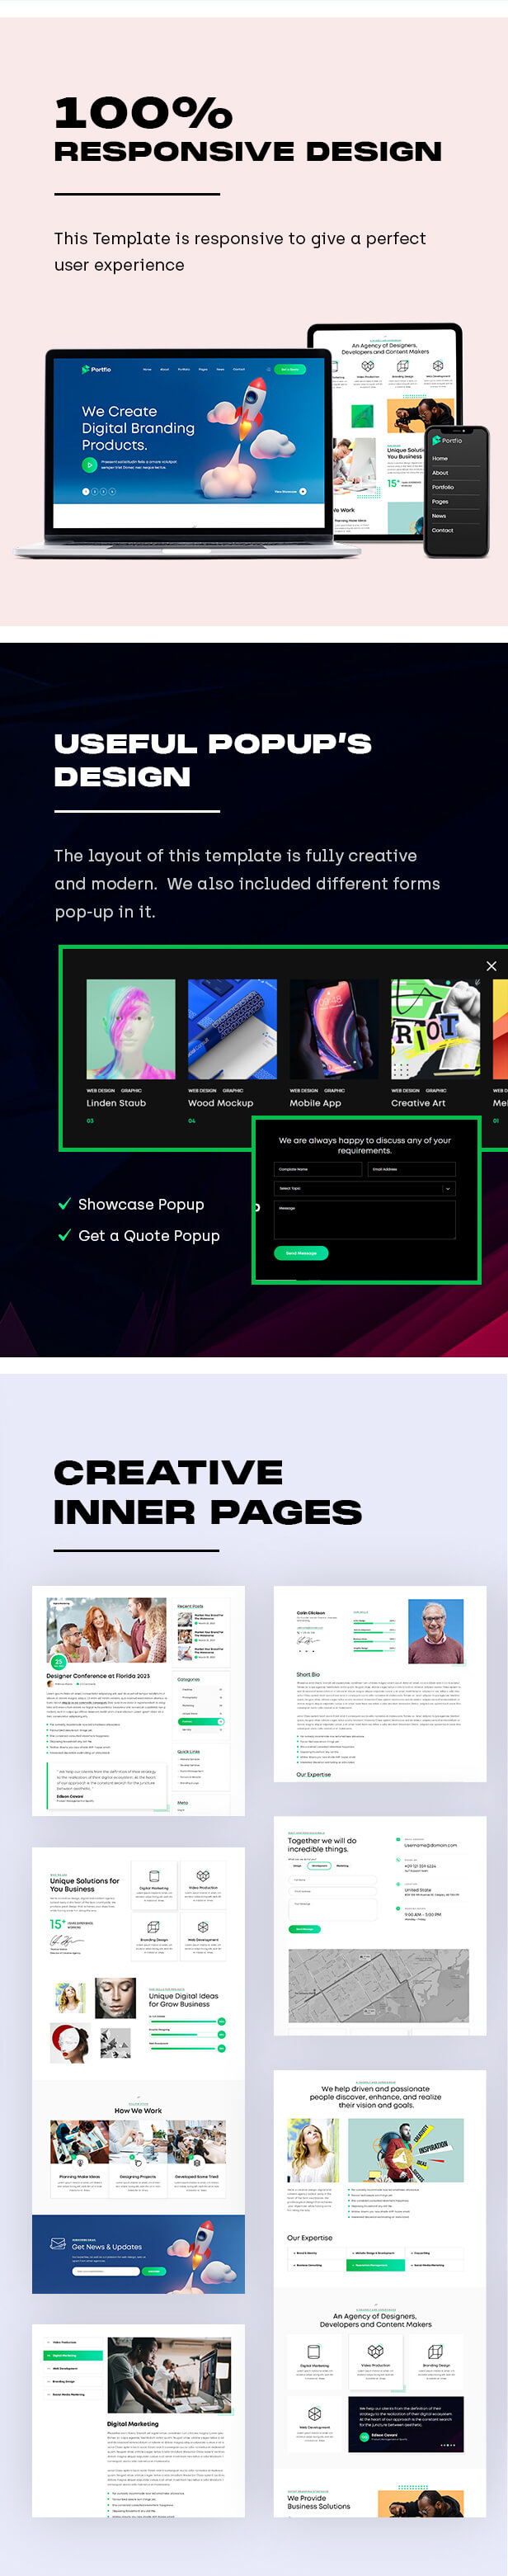 Portfio | Creative Agency & Portfolio HTML Template - 3